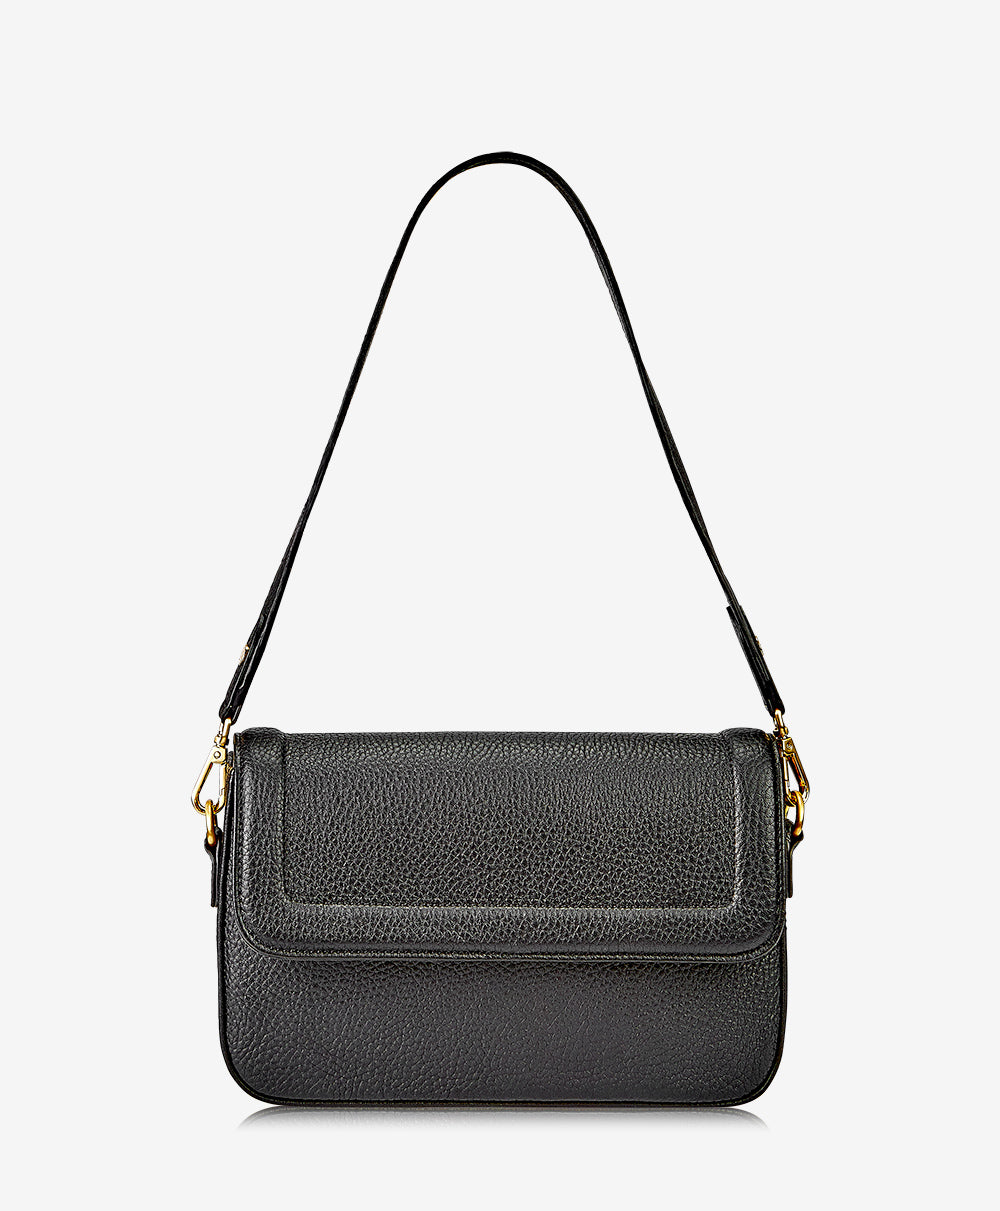 GiGi New York Margot Shoulder Bag Black Pebble Grain Leather